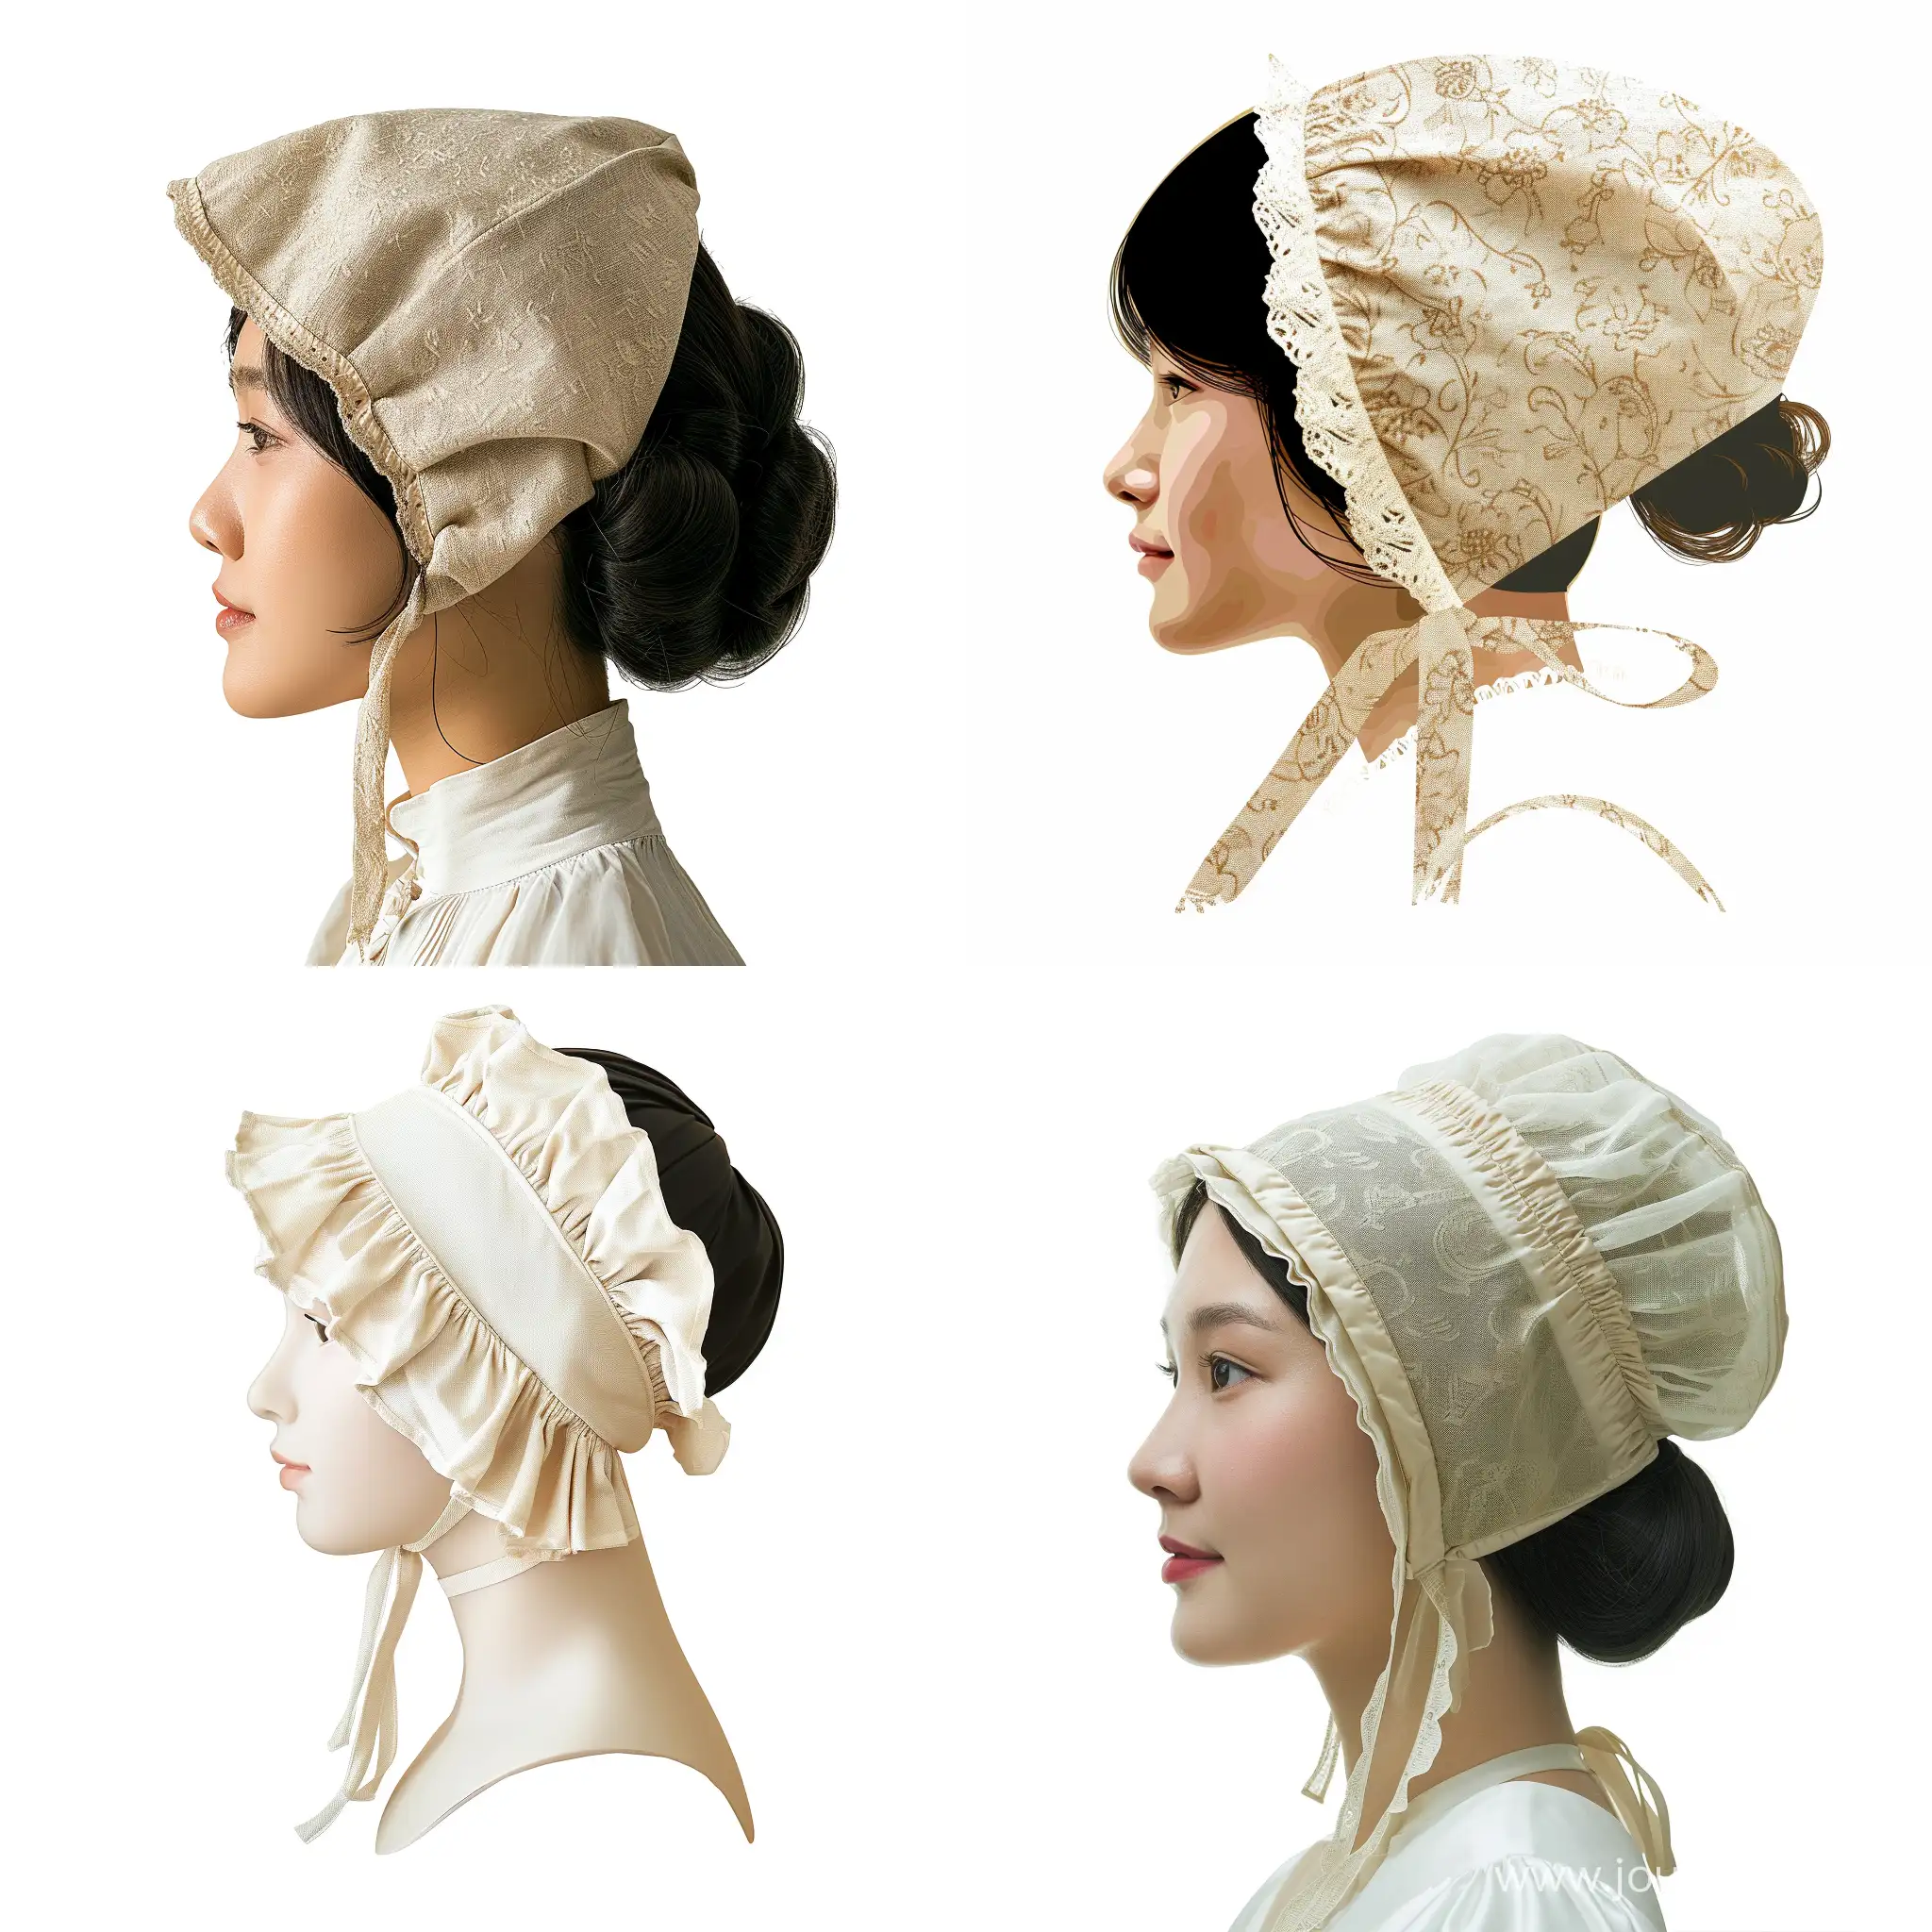 Elegant-Asian-Caucasian-Female-Head-Silhouette-with-Hair-Bonnet-on-White-Background